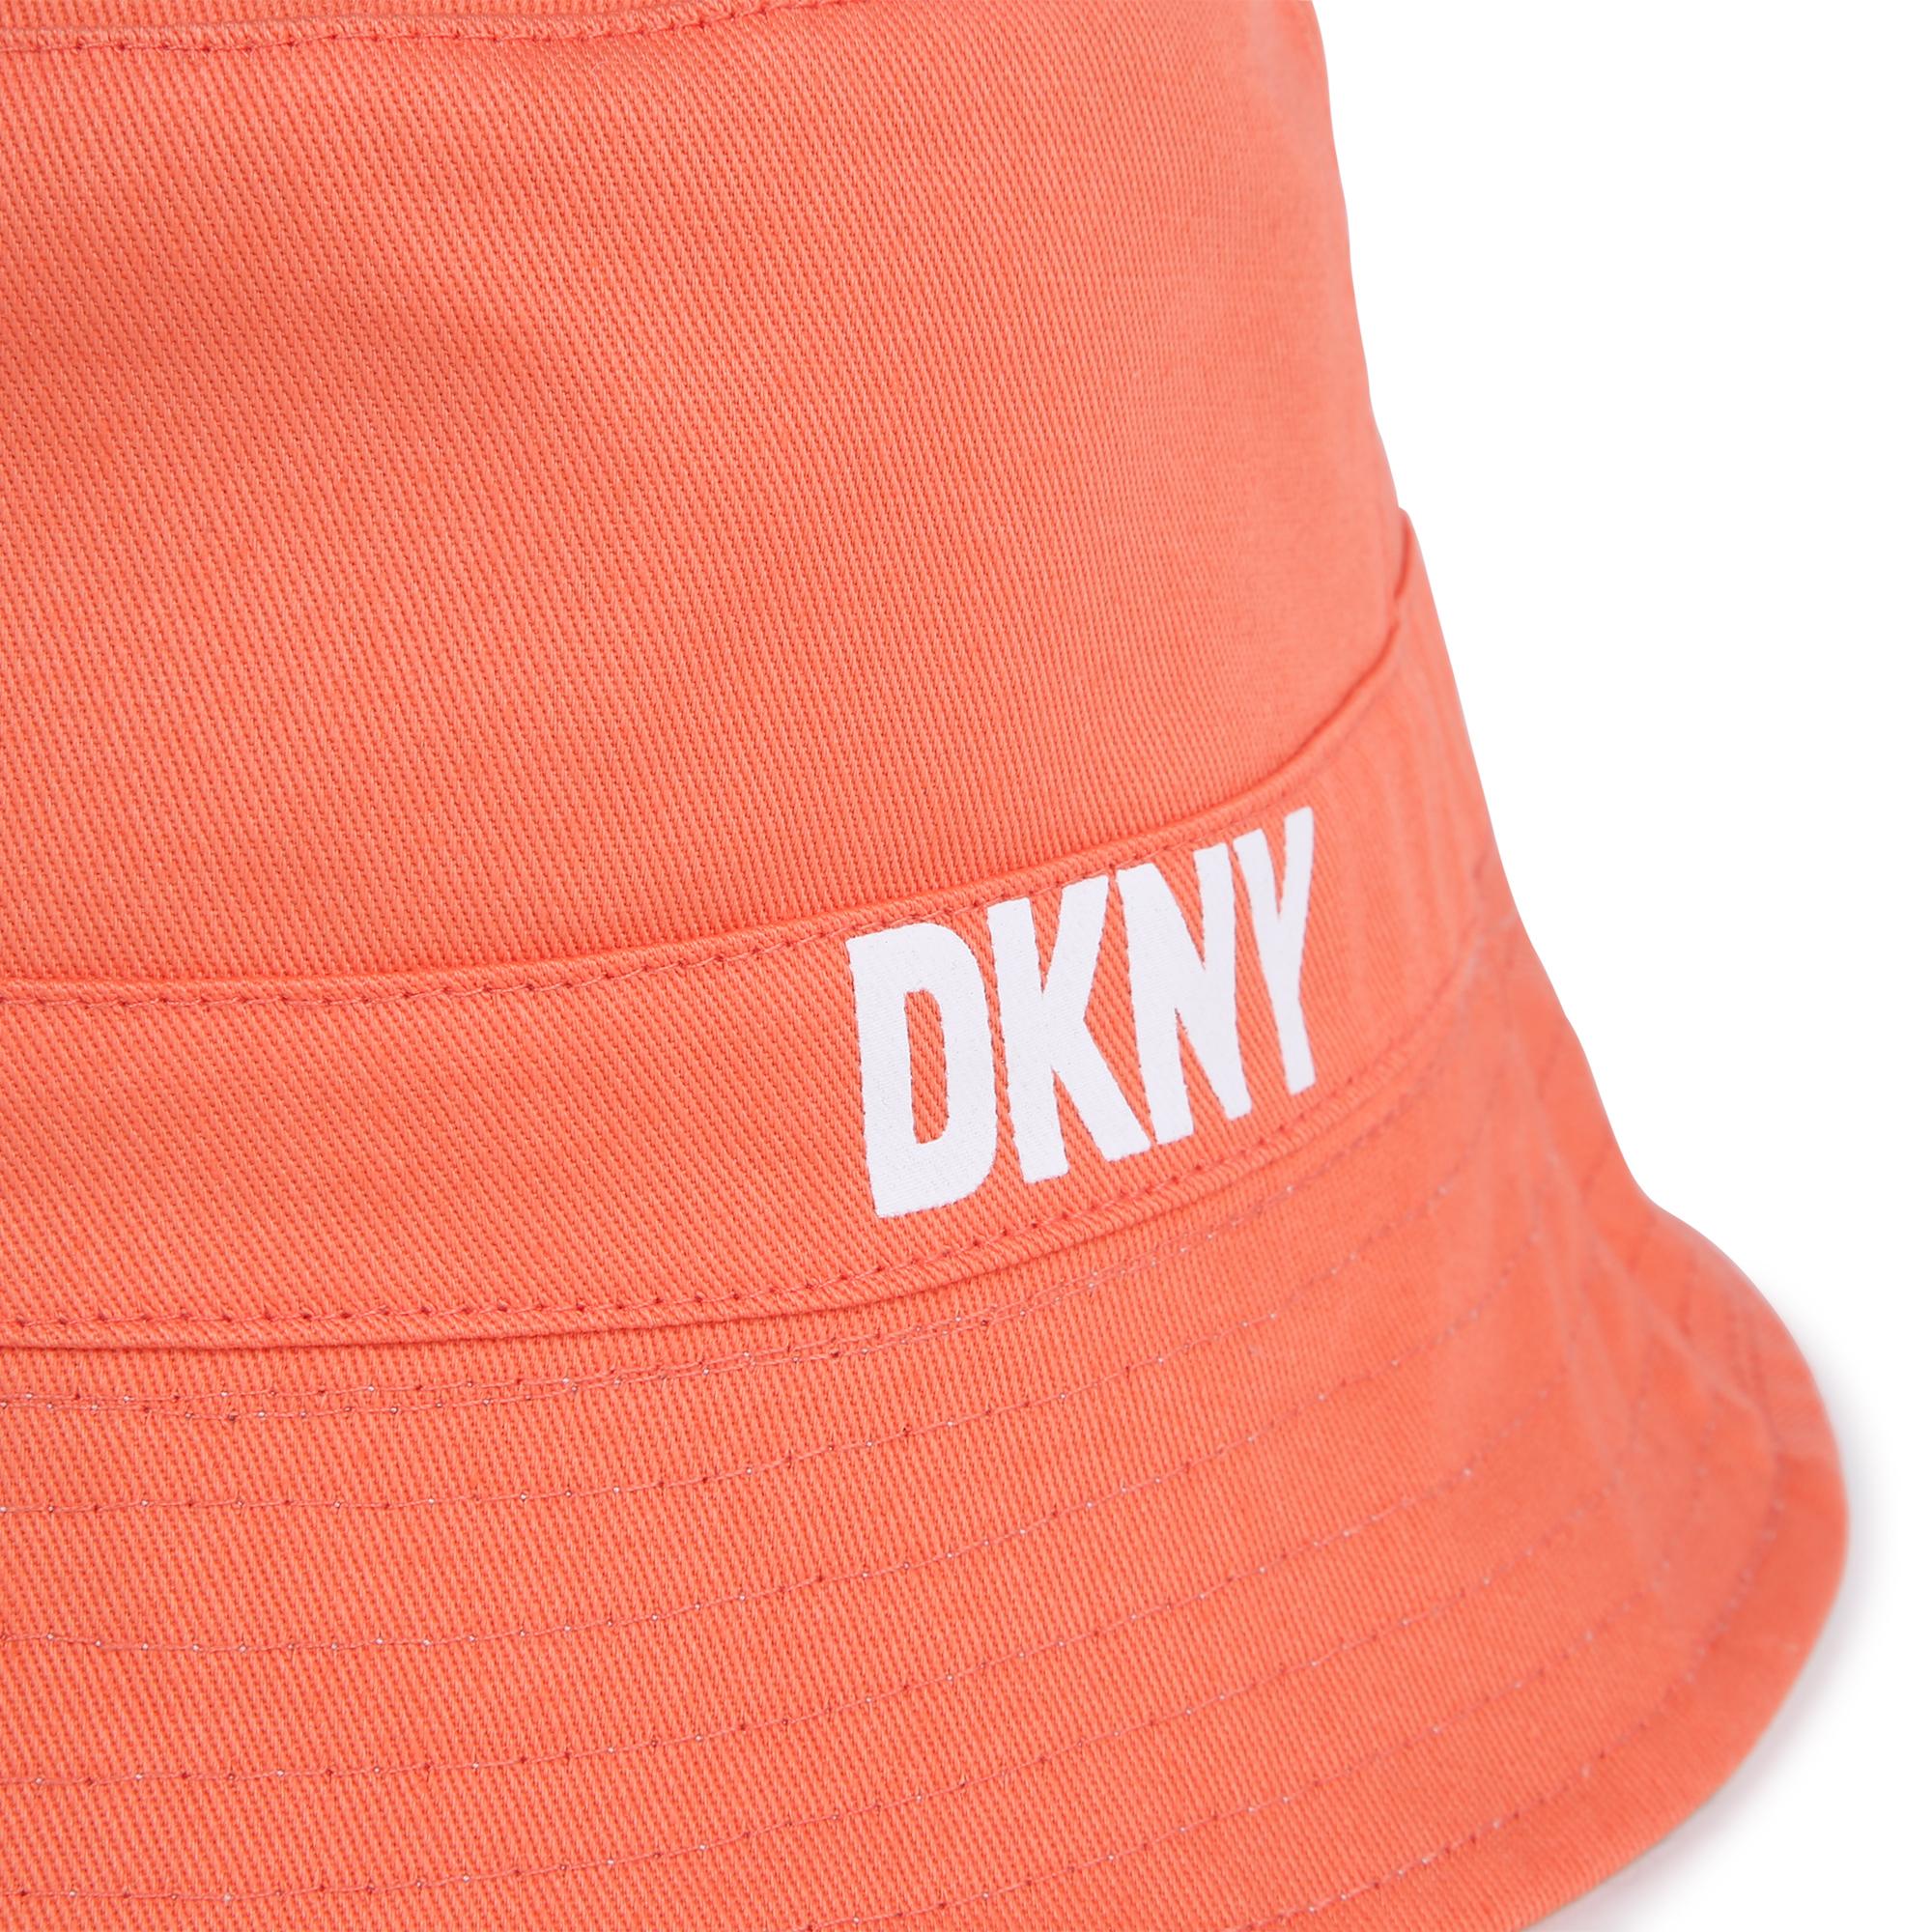 Effen omkeerbaar vissershoedje DKNY Voor